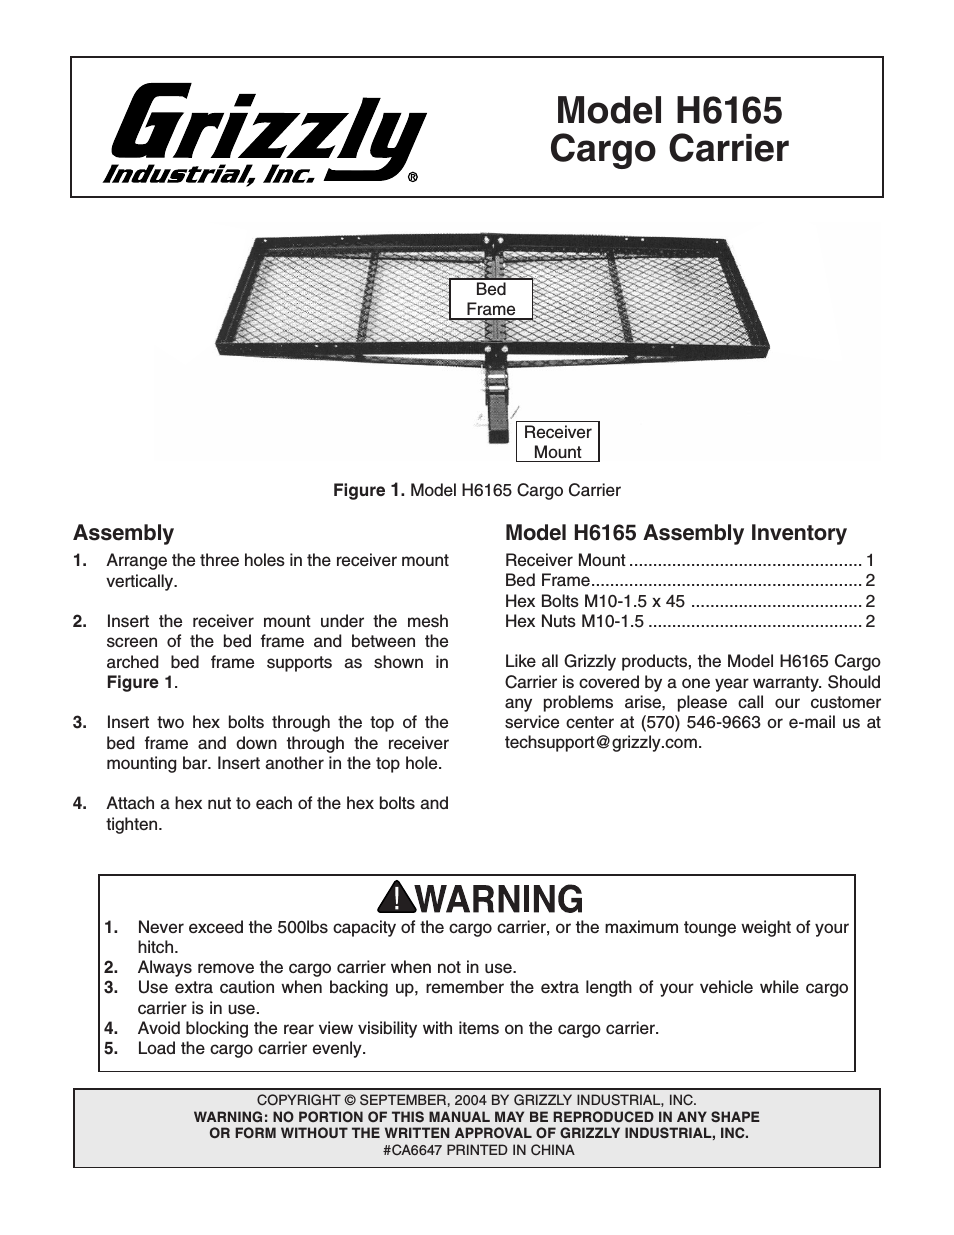 Cargo Carrier H6165